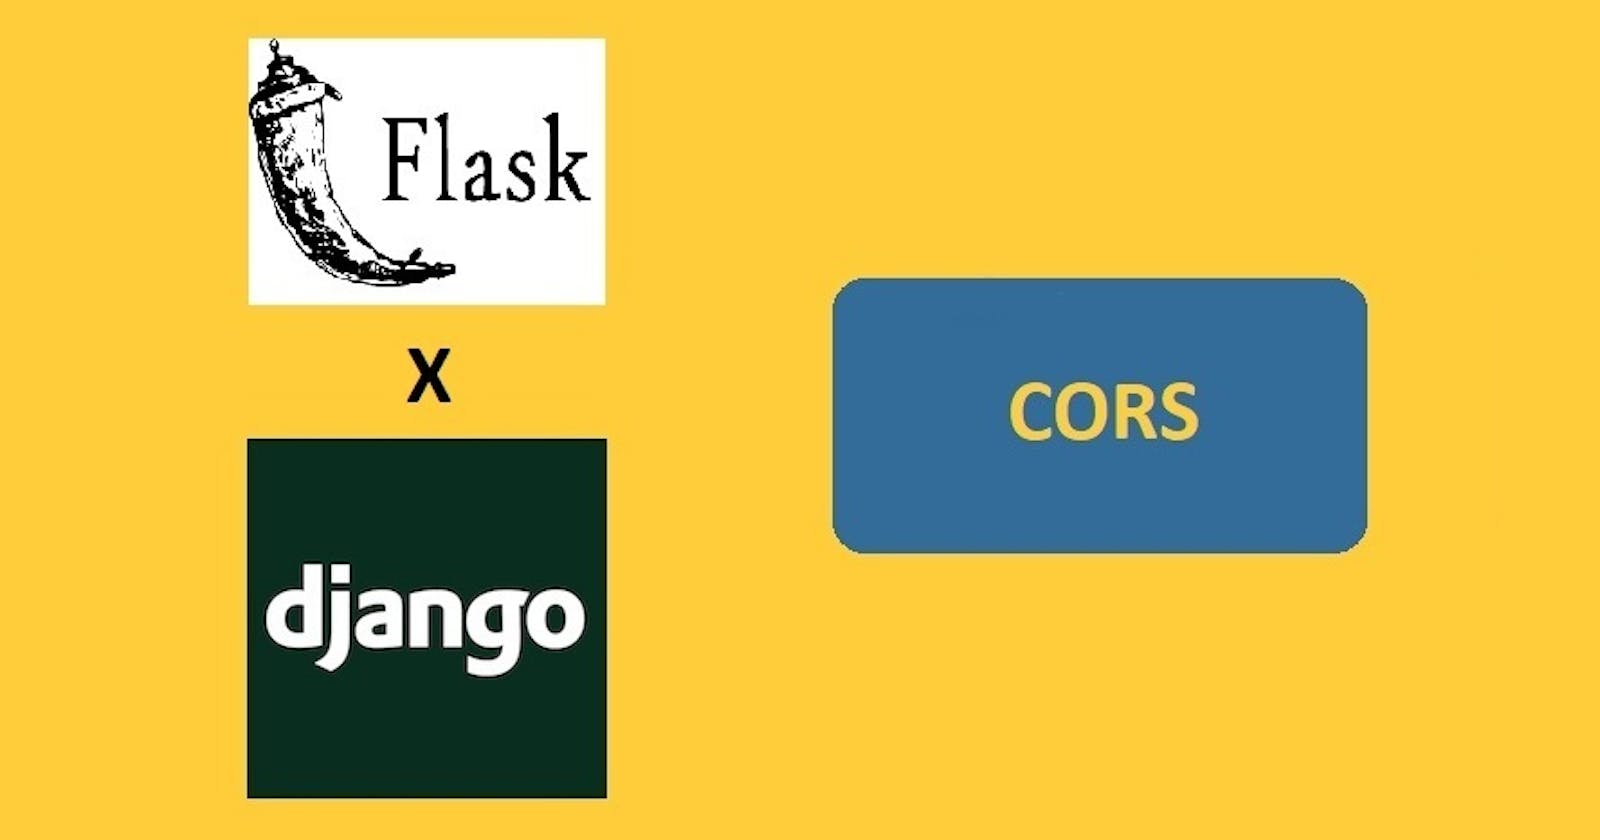 CORS explained using Django and Flask